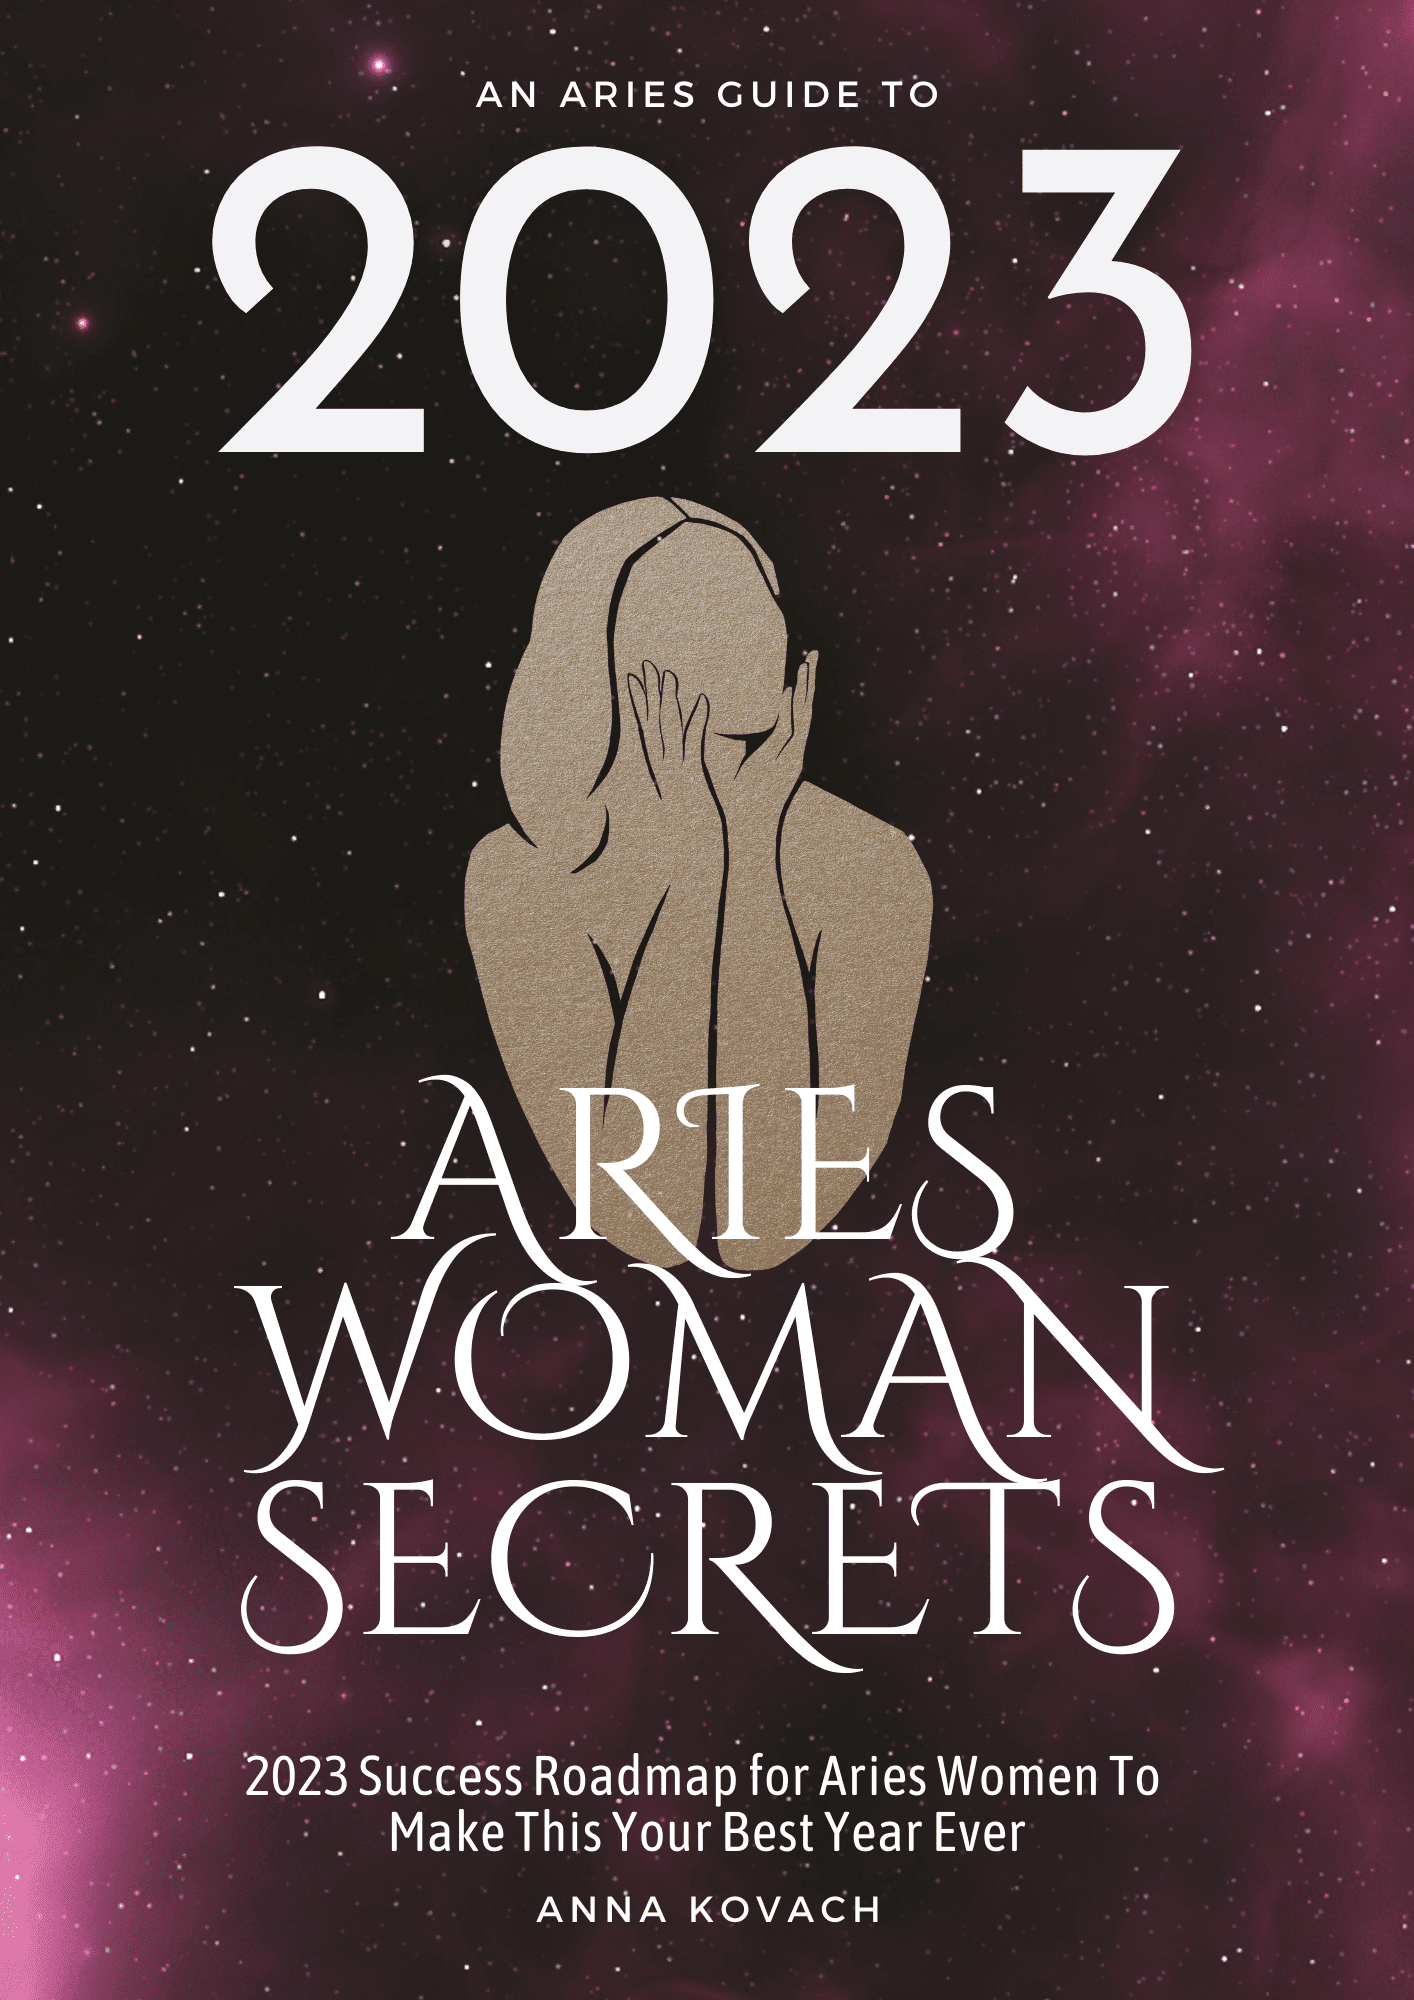 aries woman secrets 2023